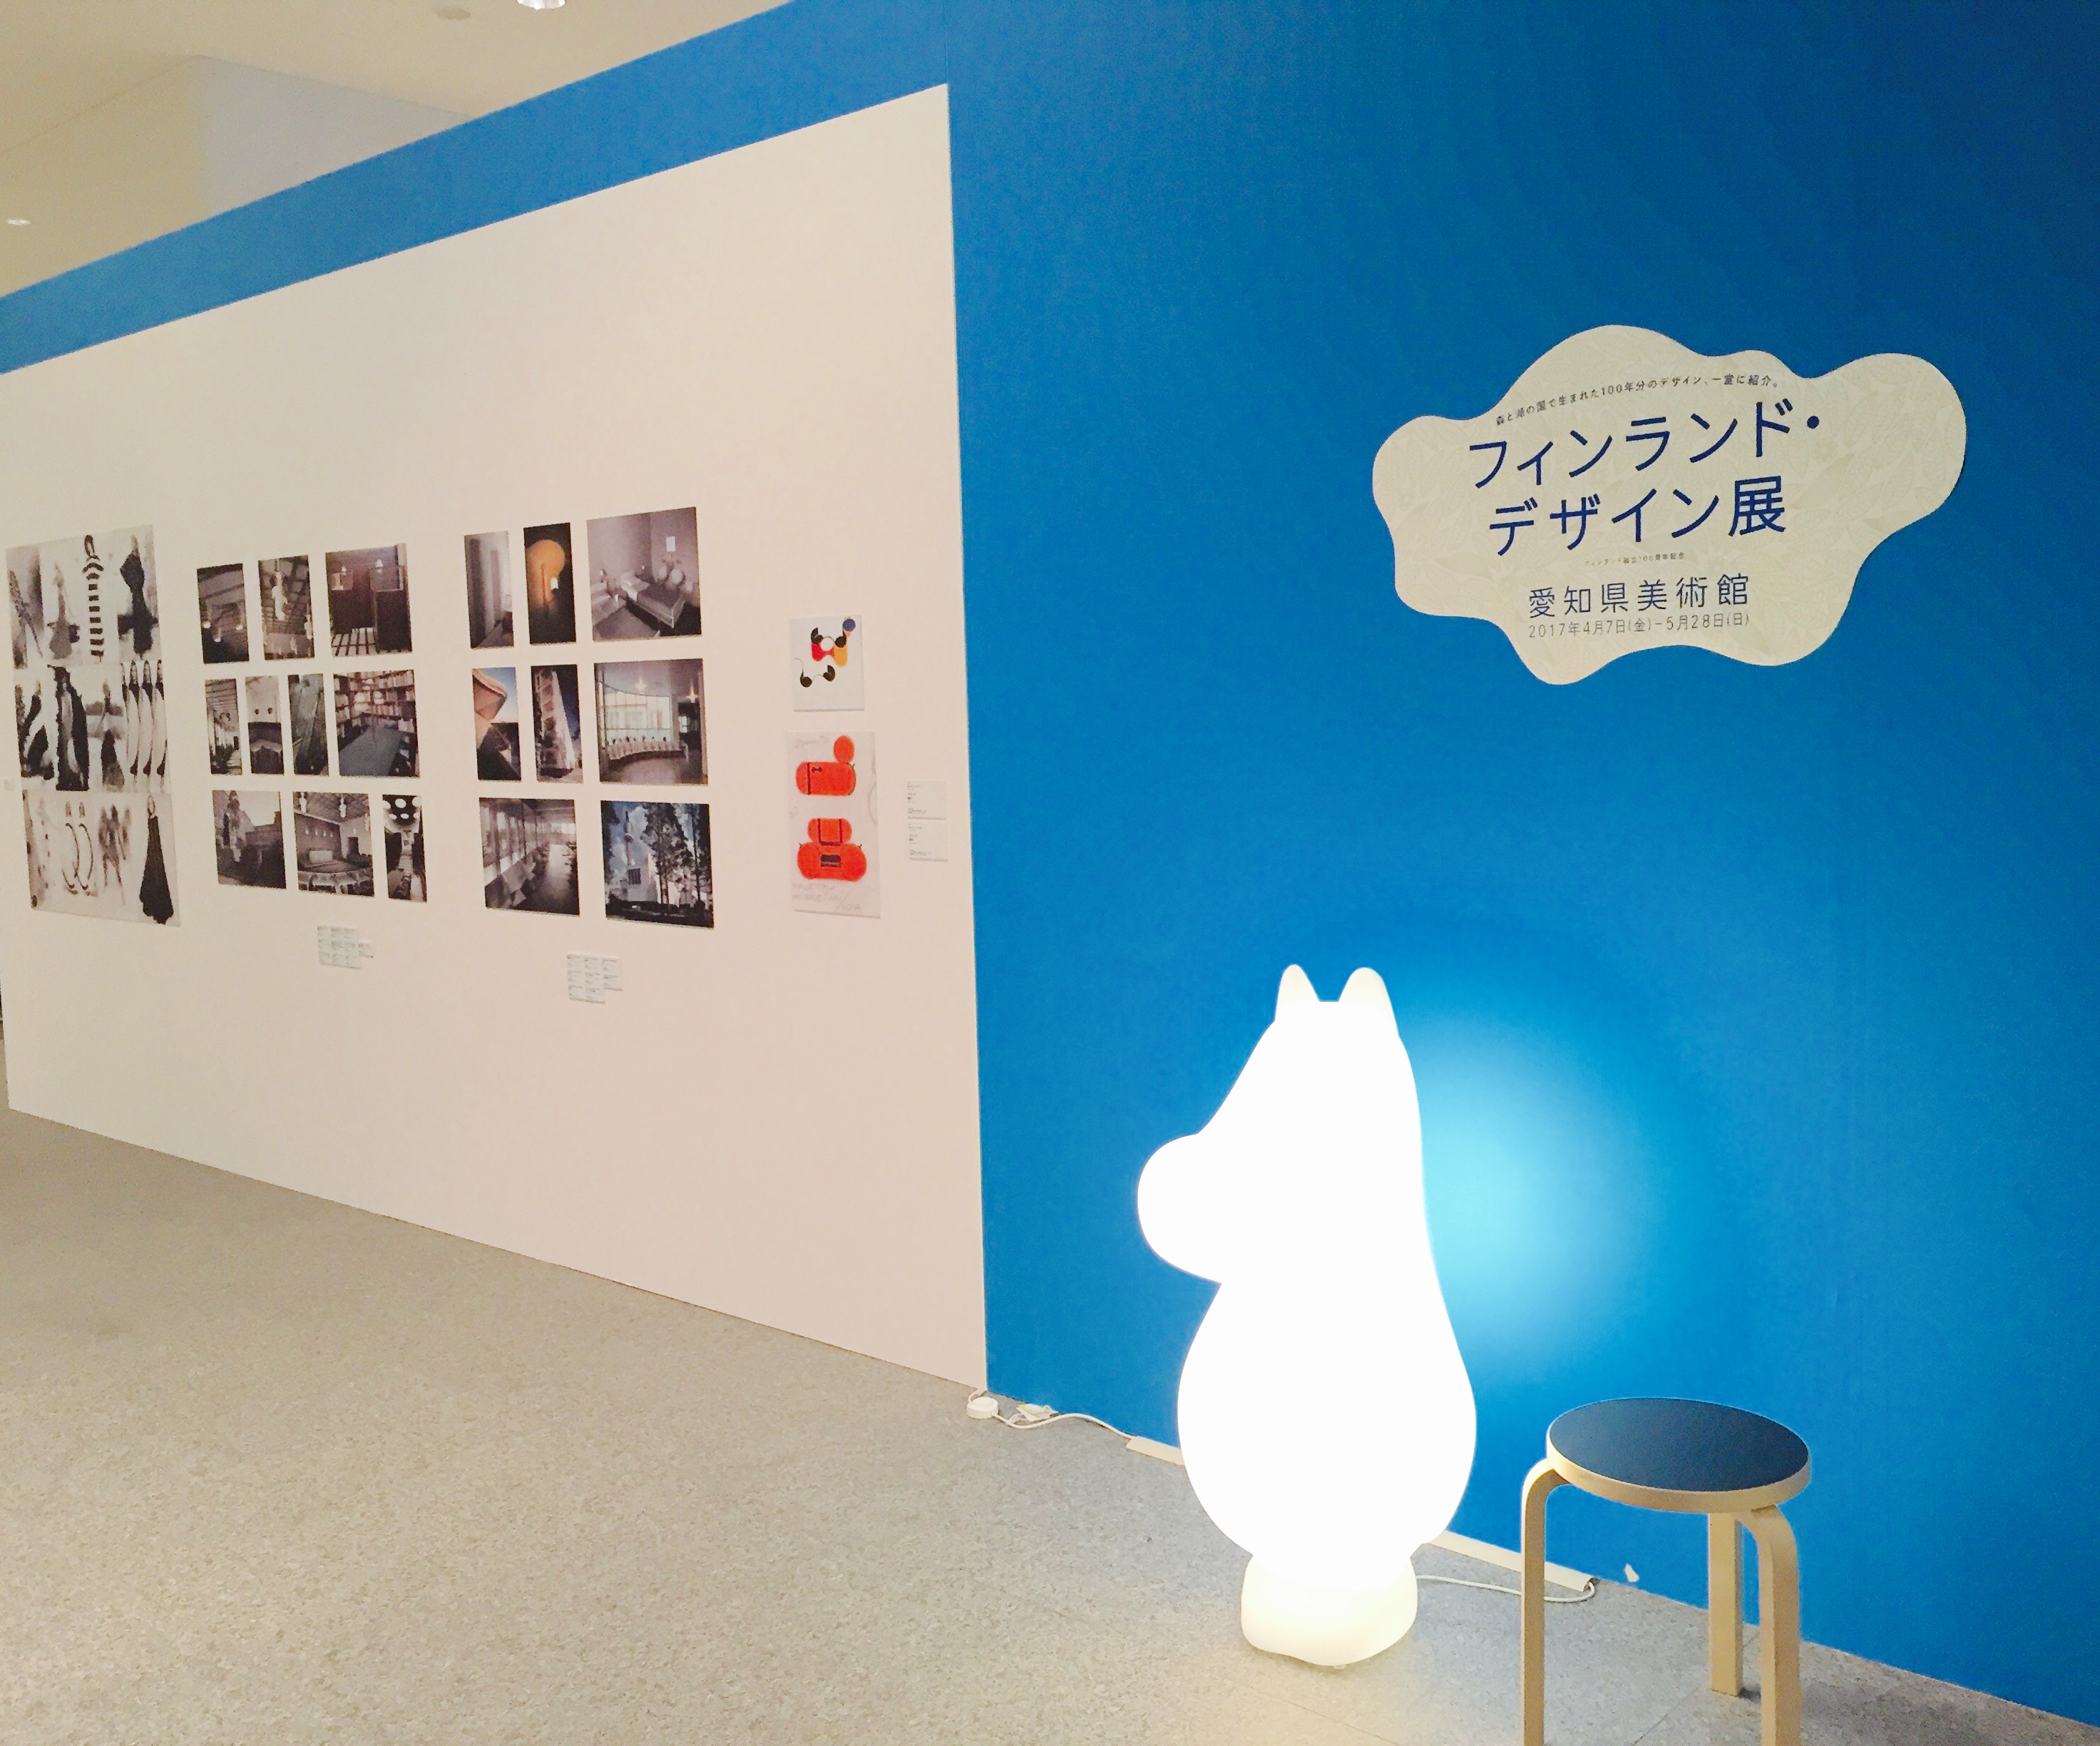 "Finnish design exhibition" in Nagoya.-2017.5.28